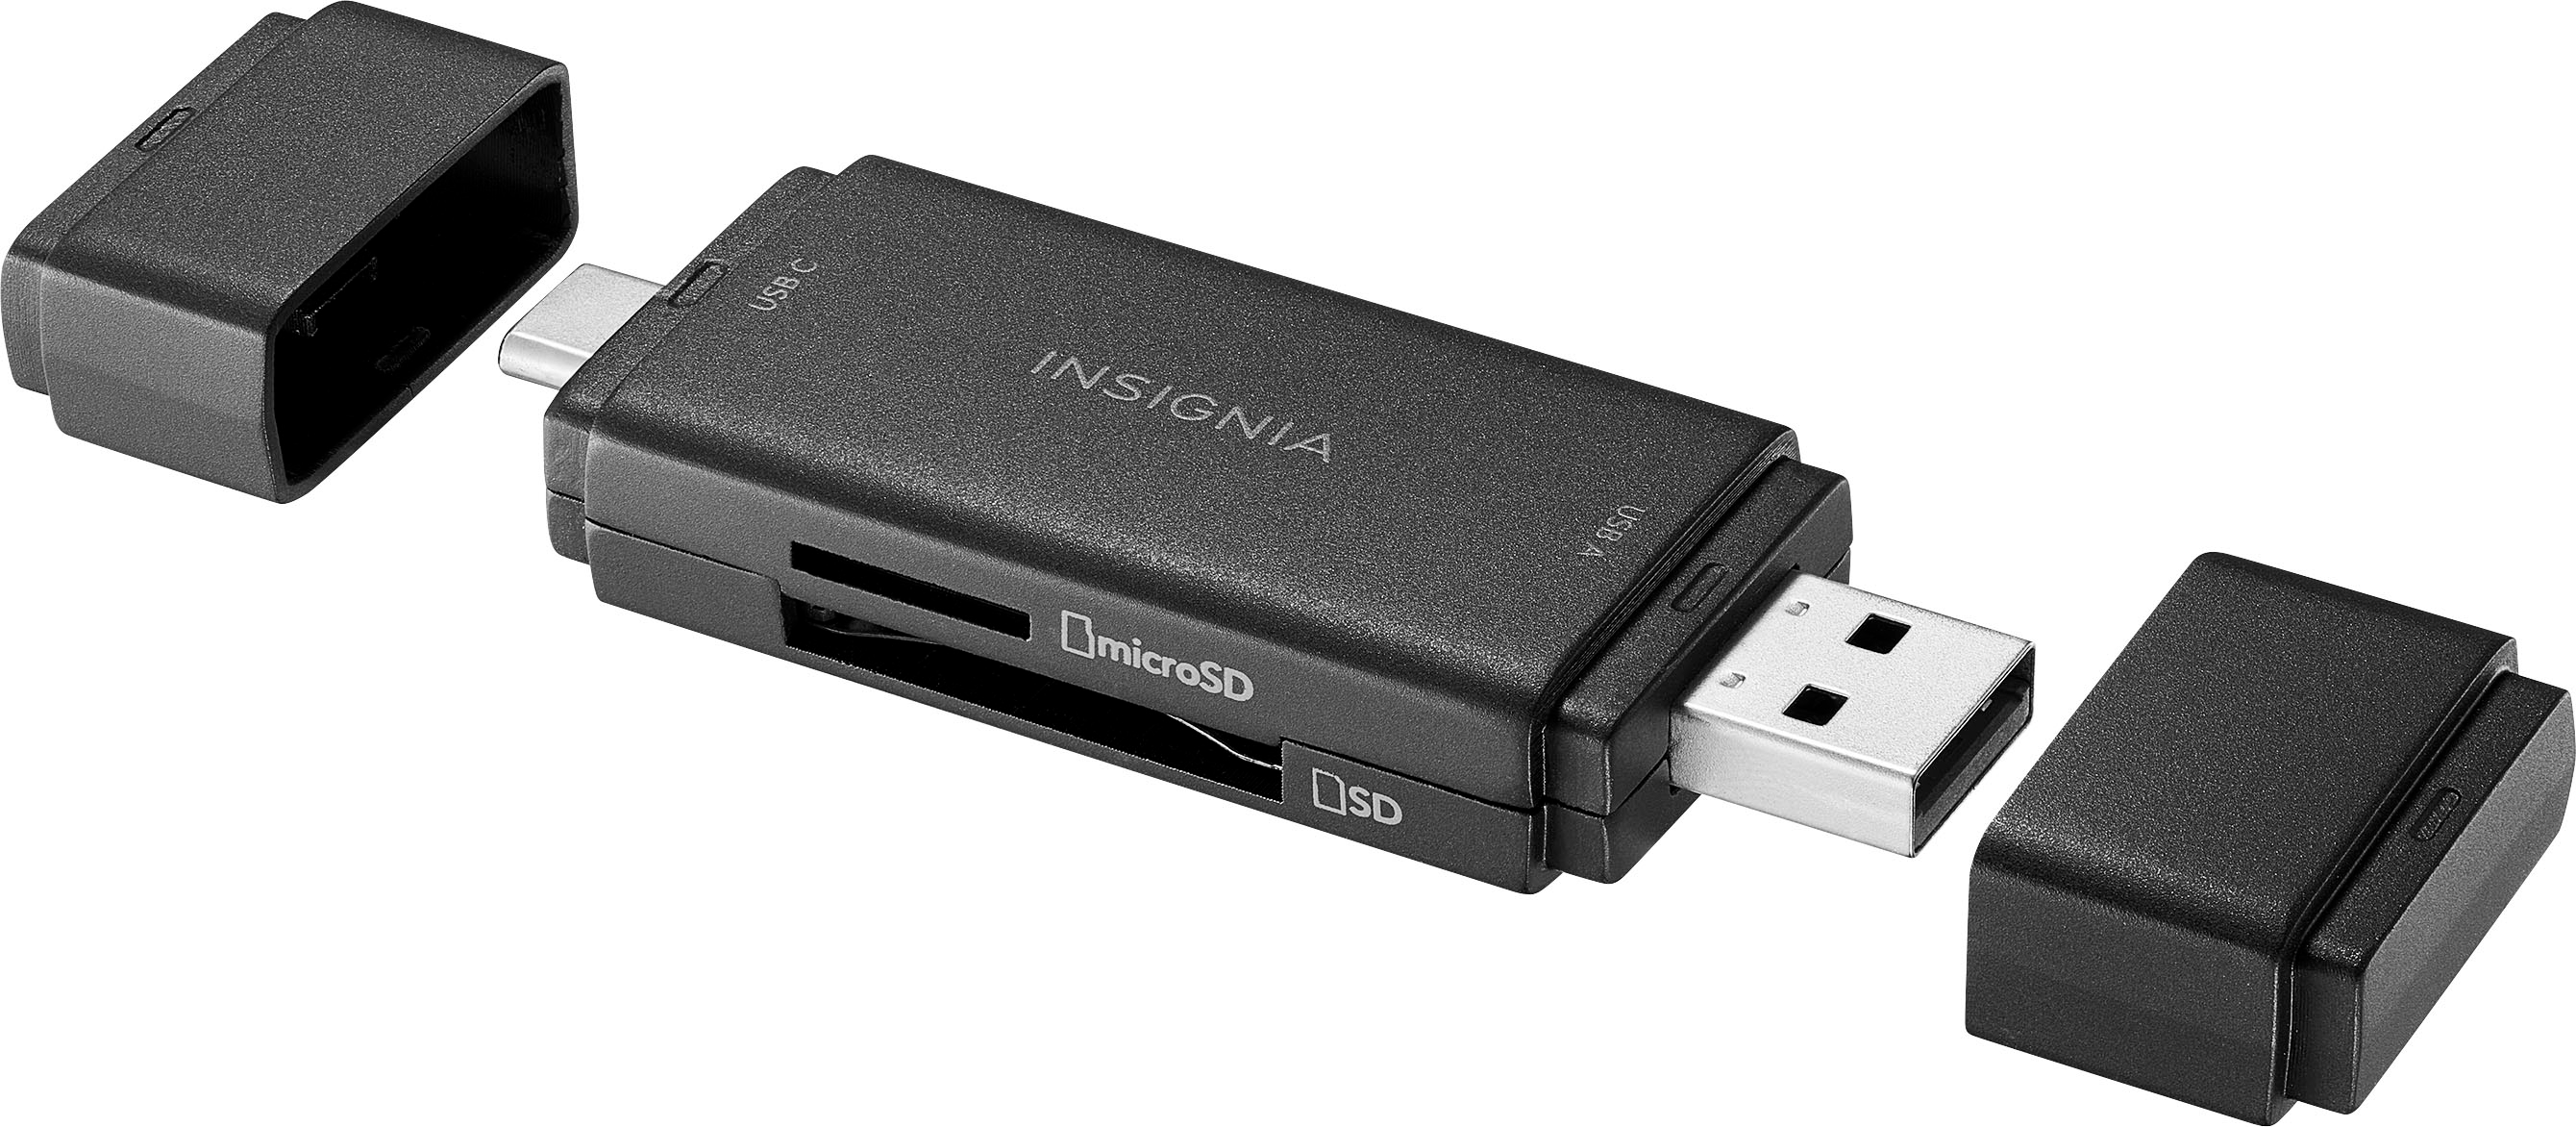 Insignia™ USB-C/USB 3.0 to SD and microSD Memory Card Reader Black